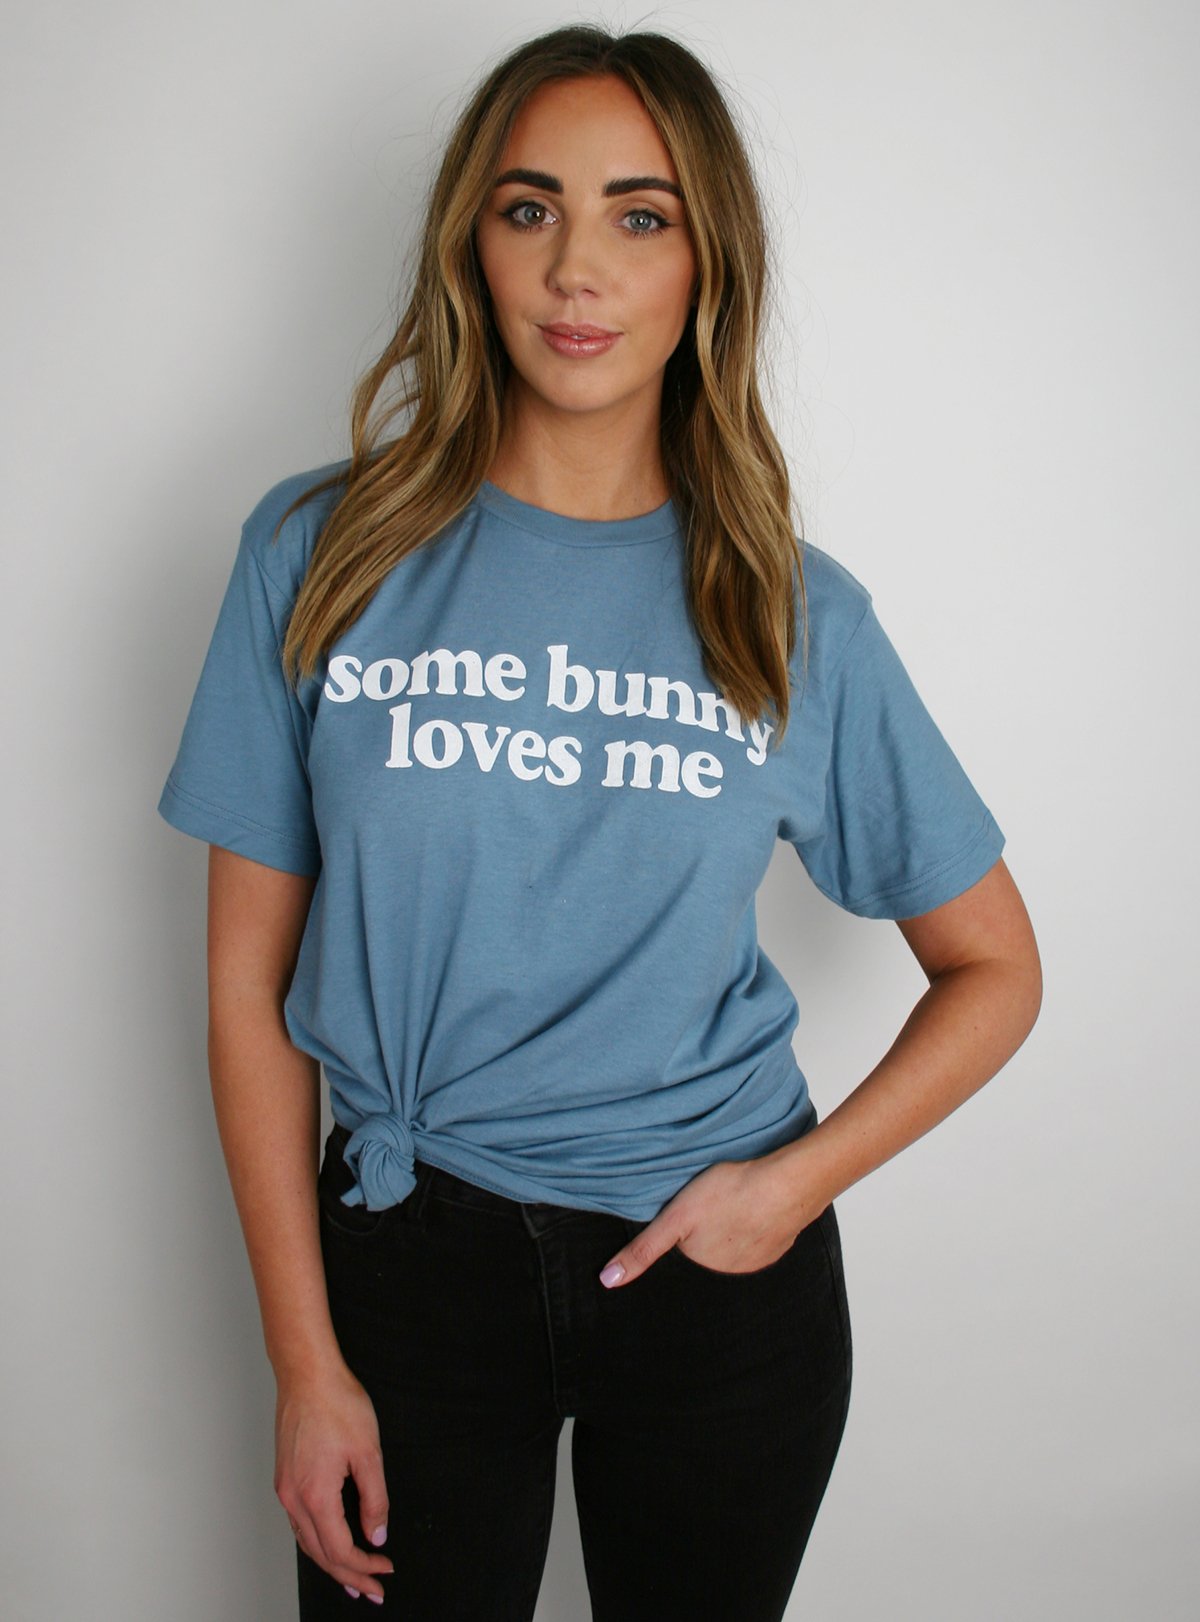 Love Bunny Matching T-Shirt Set